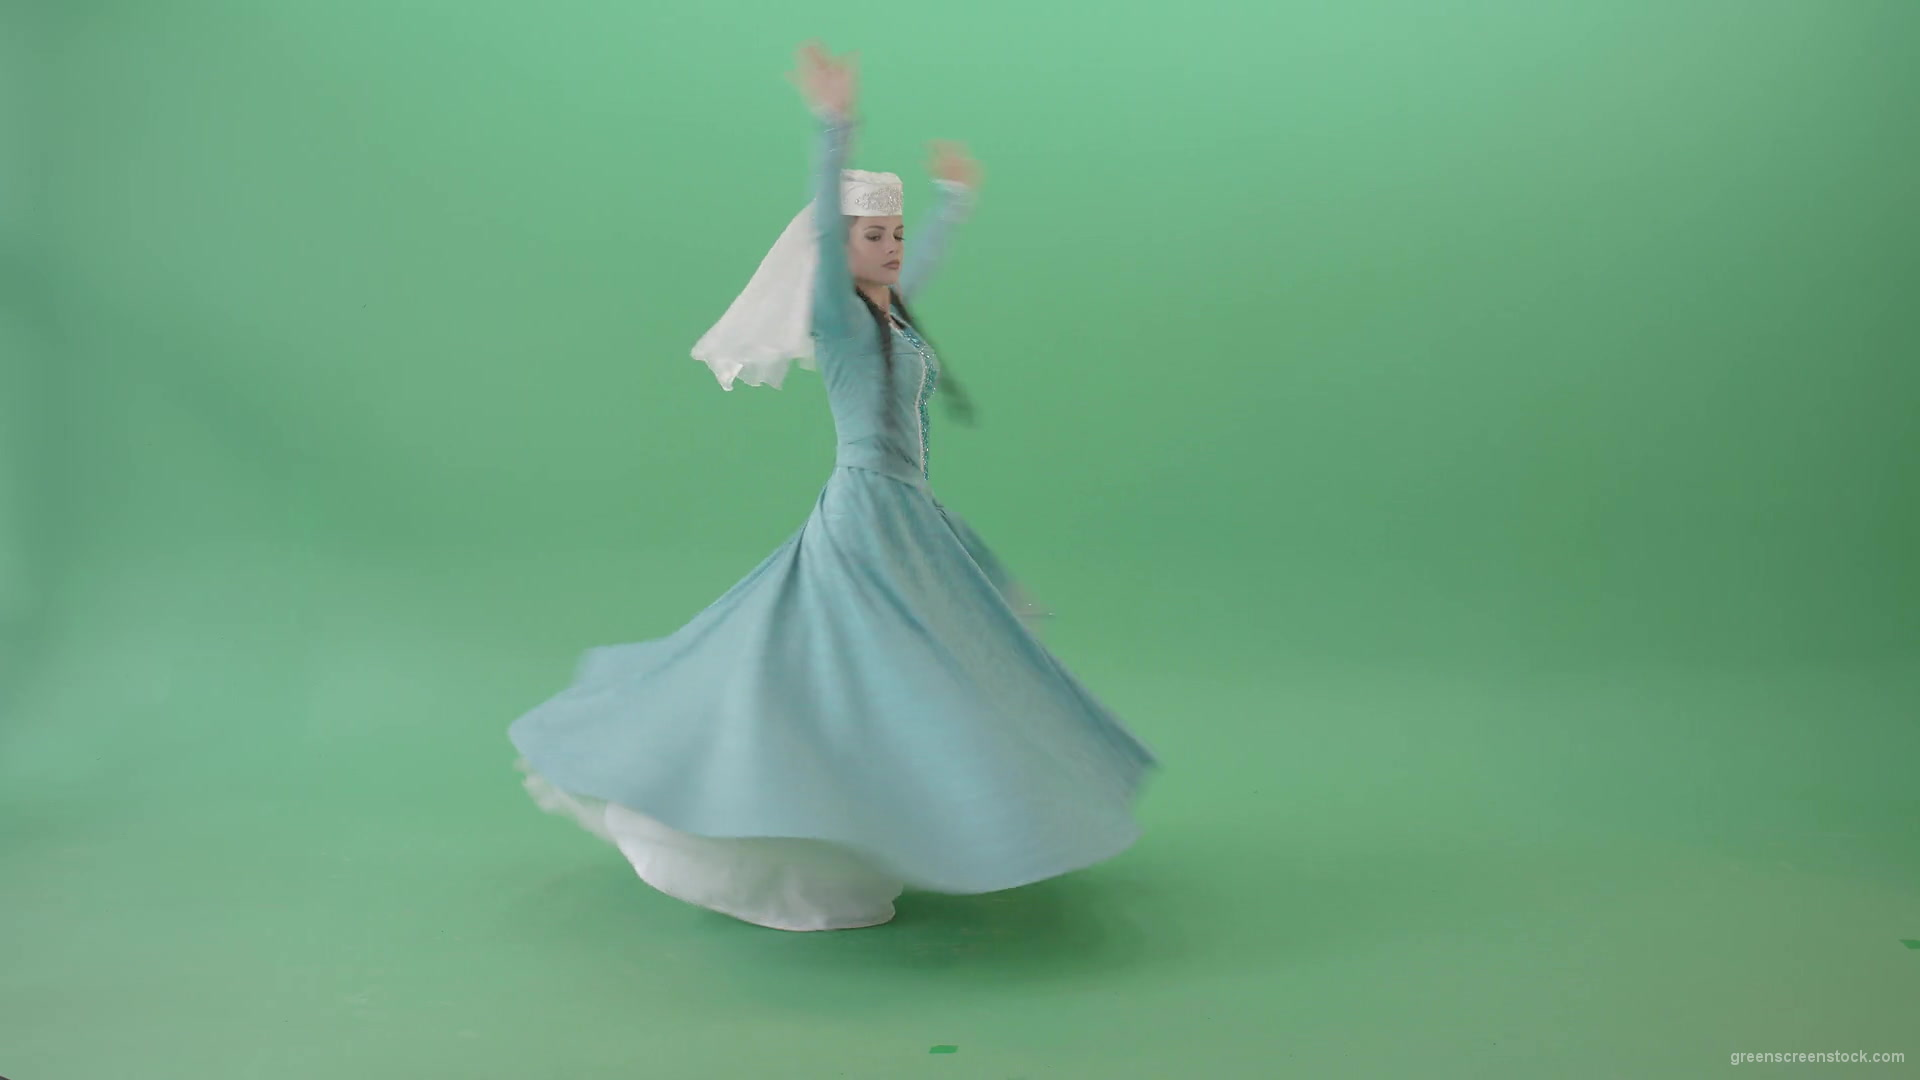 Georgian-elegant-girl-dancing-Perkhuli-folk-dance-isolated-on-green-screen-4K-Video-Footage-1920_009 Green Screen Stock